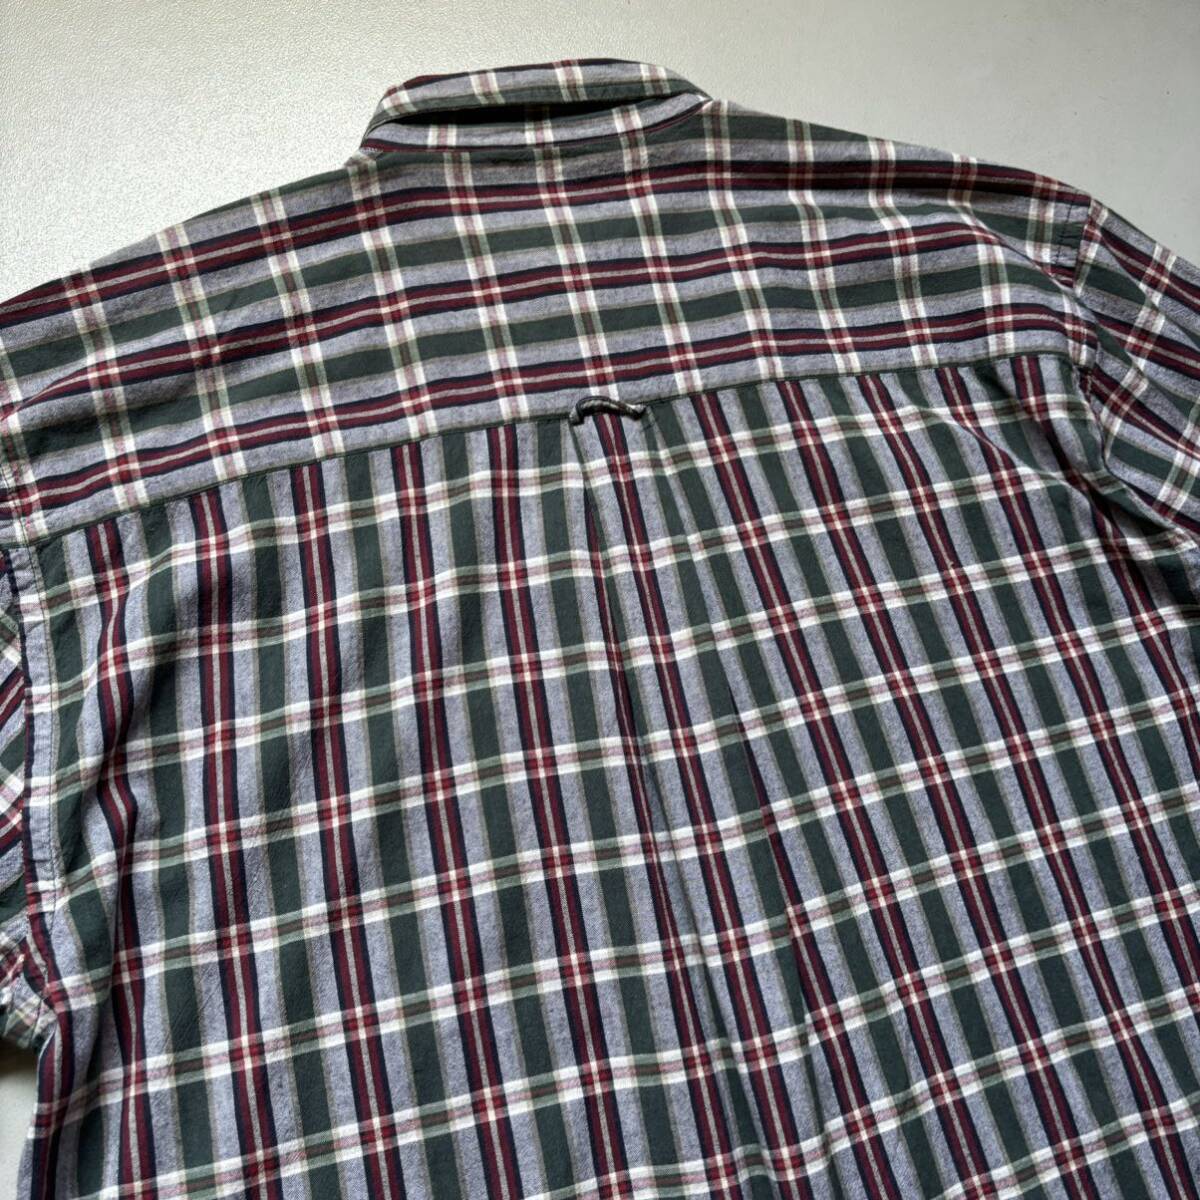 90s〜 Eddie Bauer S/S check shirt “size L” 90年代 エディバウアー 半袖シャツ チェックシャツ ボタンダウンシャツ